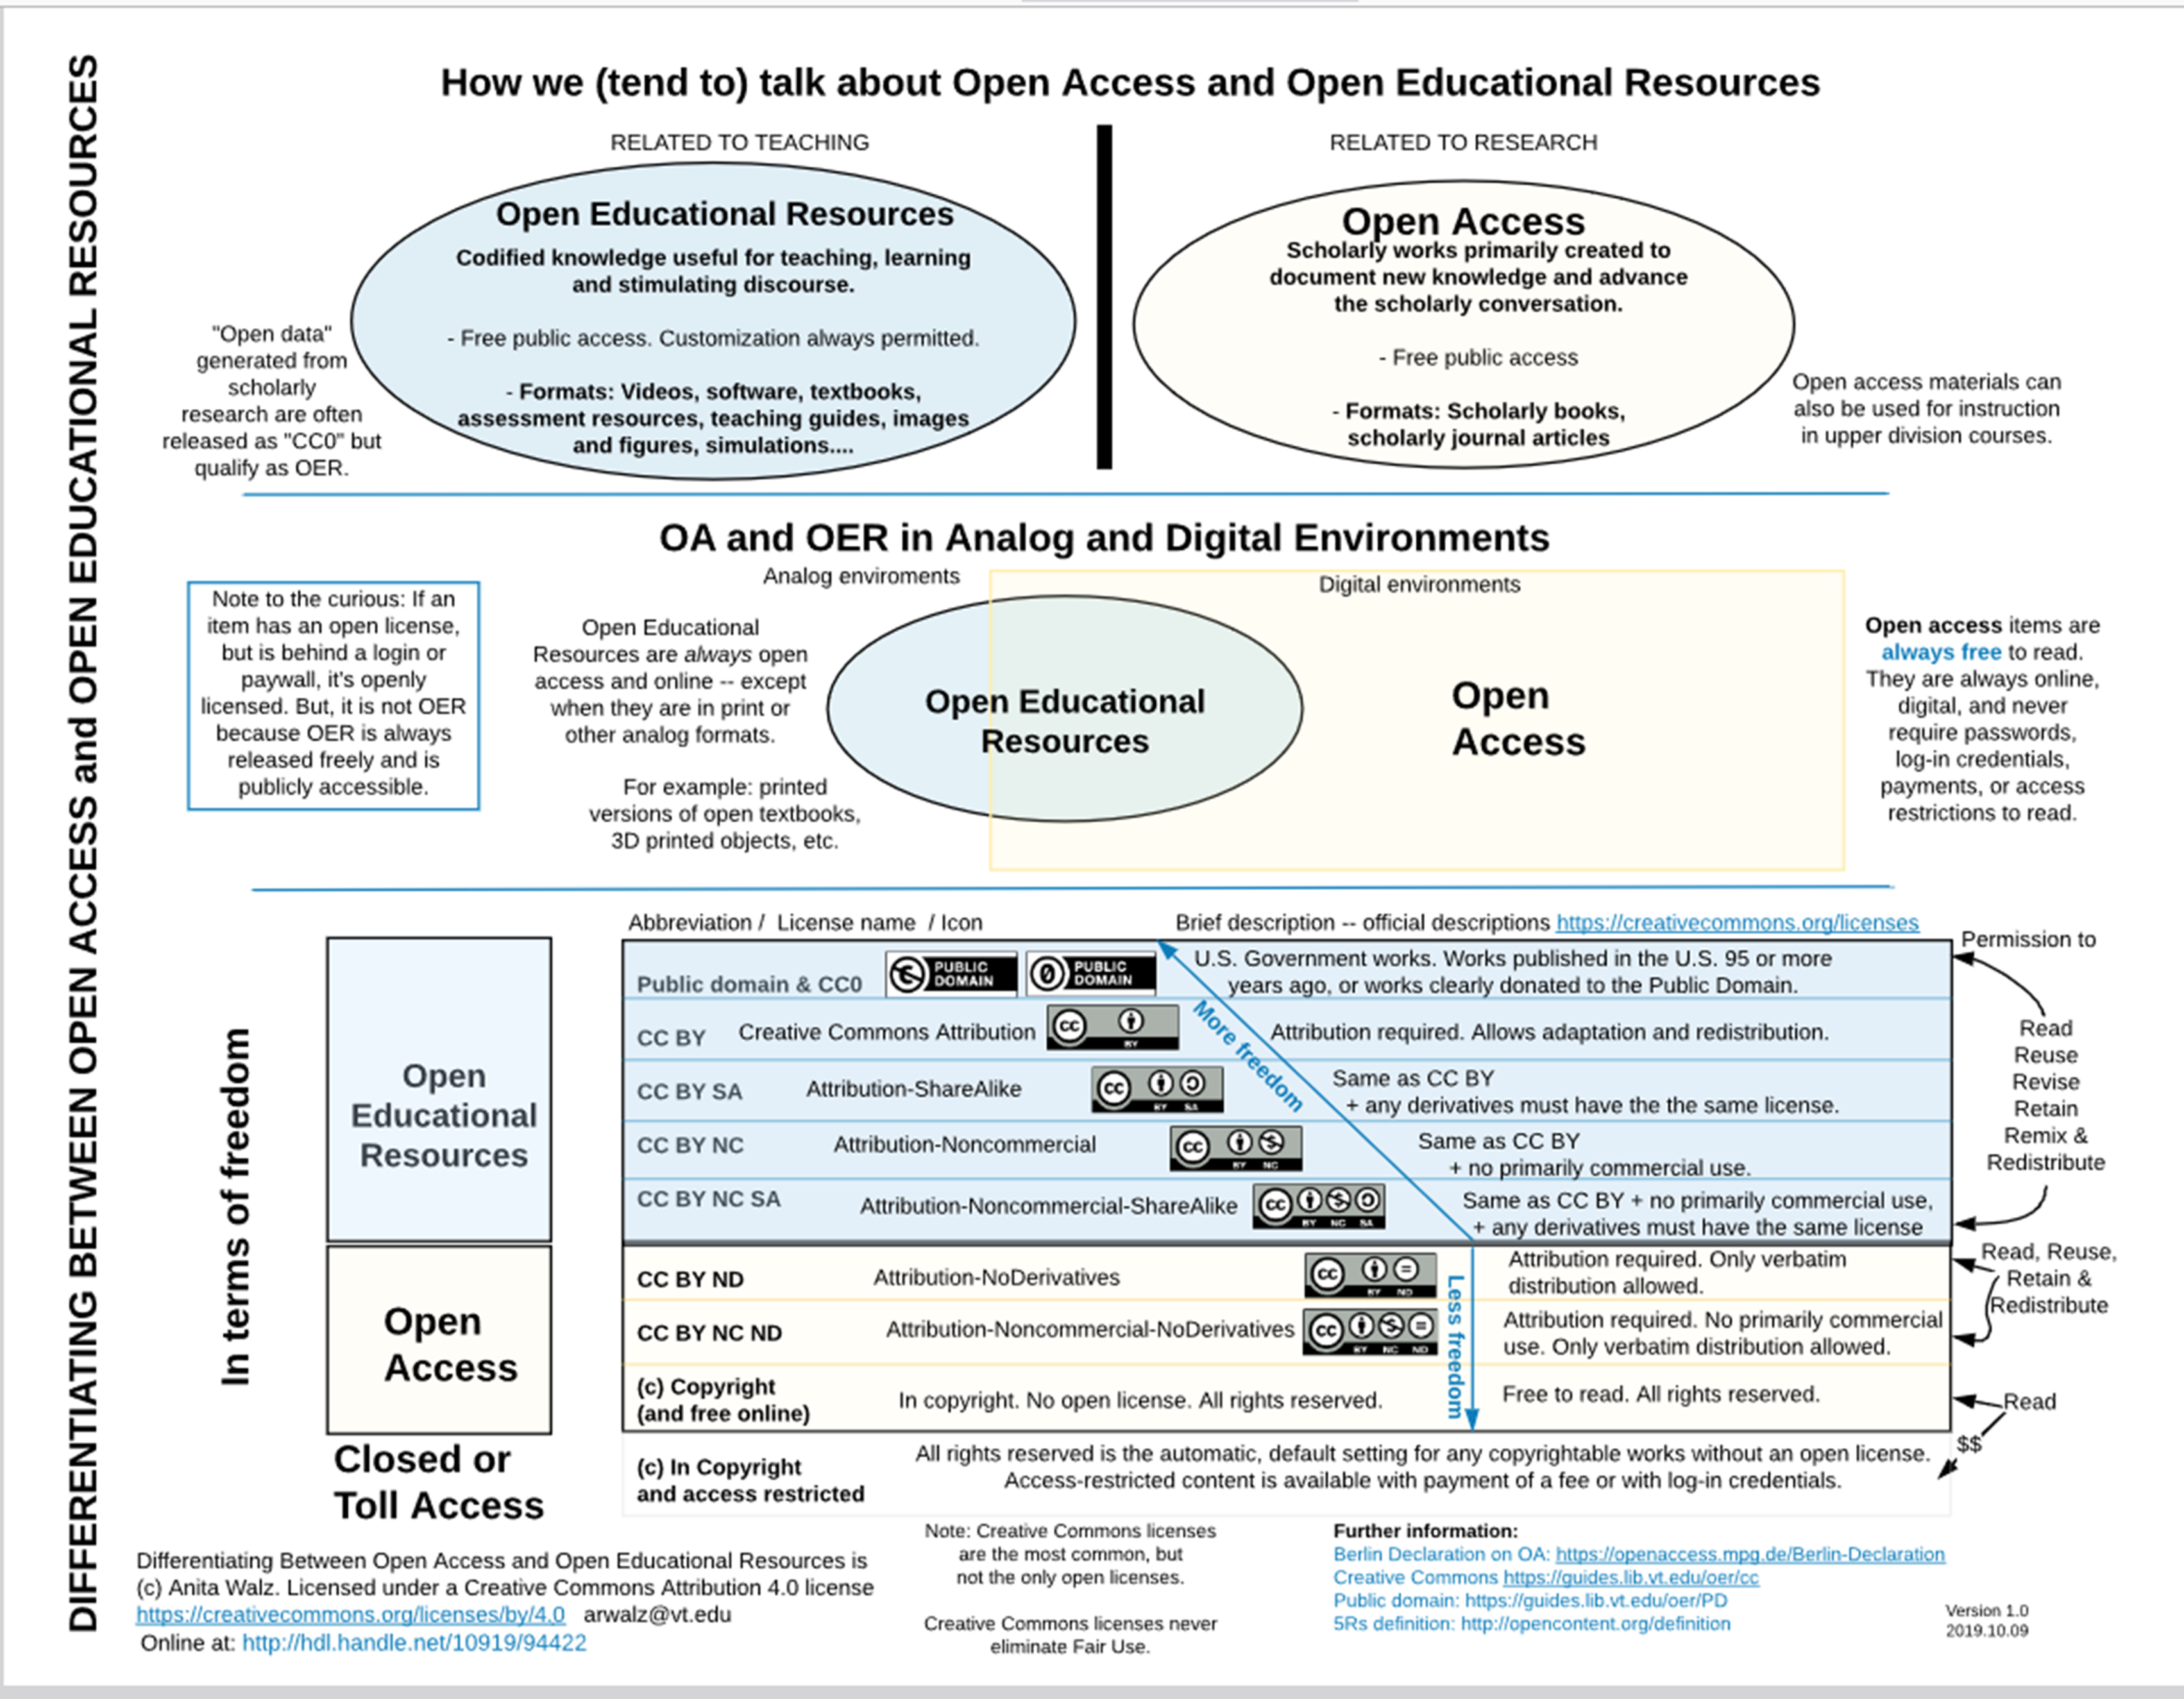 Poster describing copyright distinctions for Open Education Materials